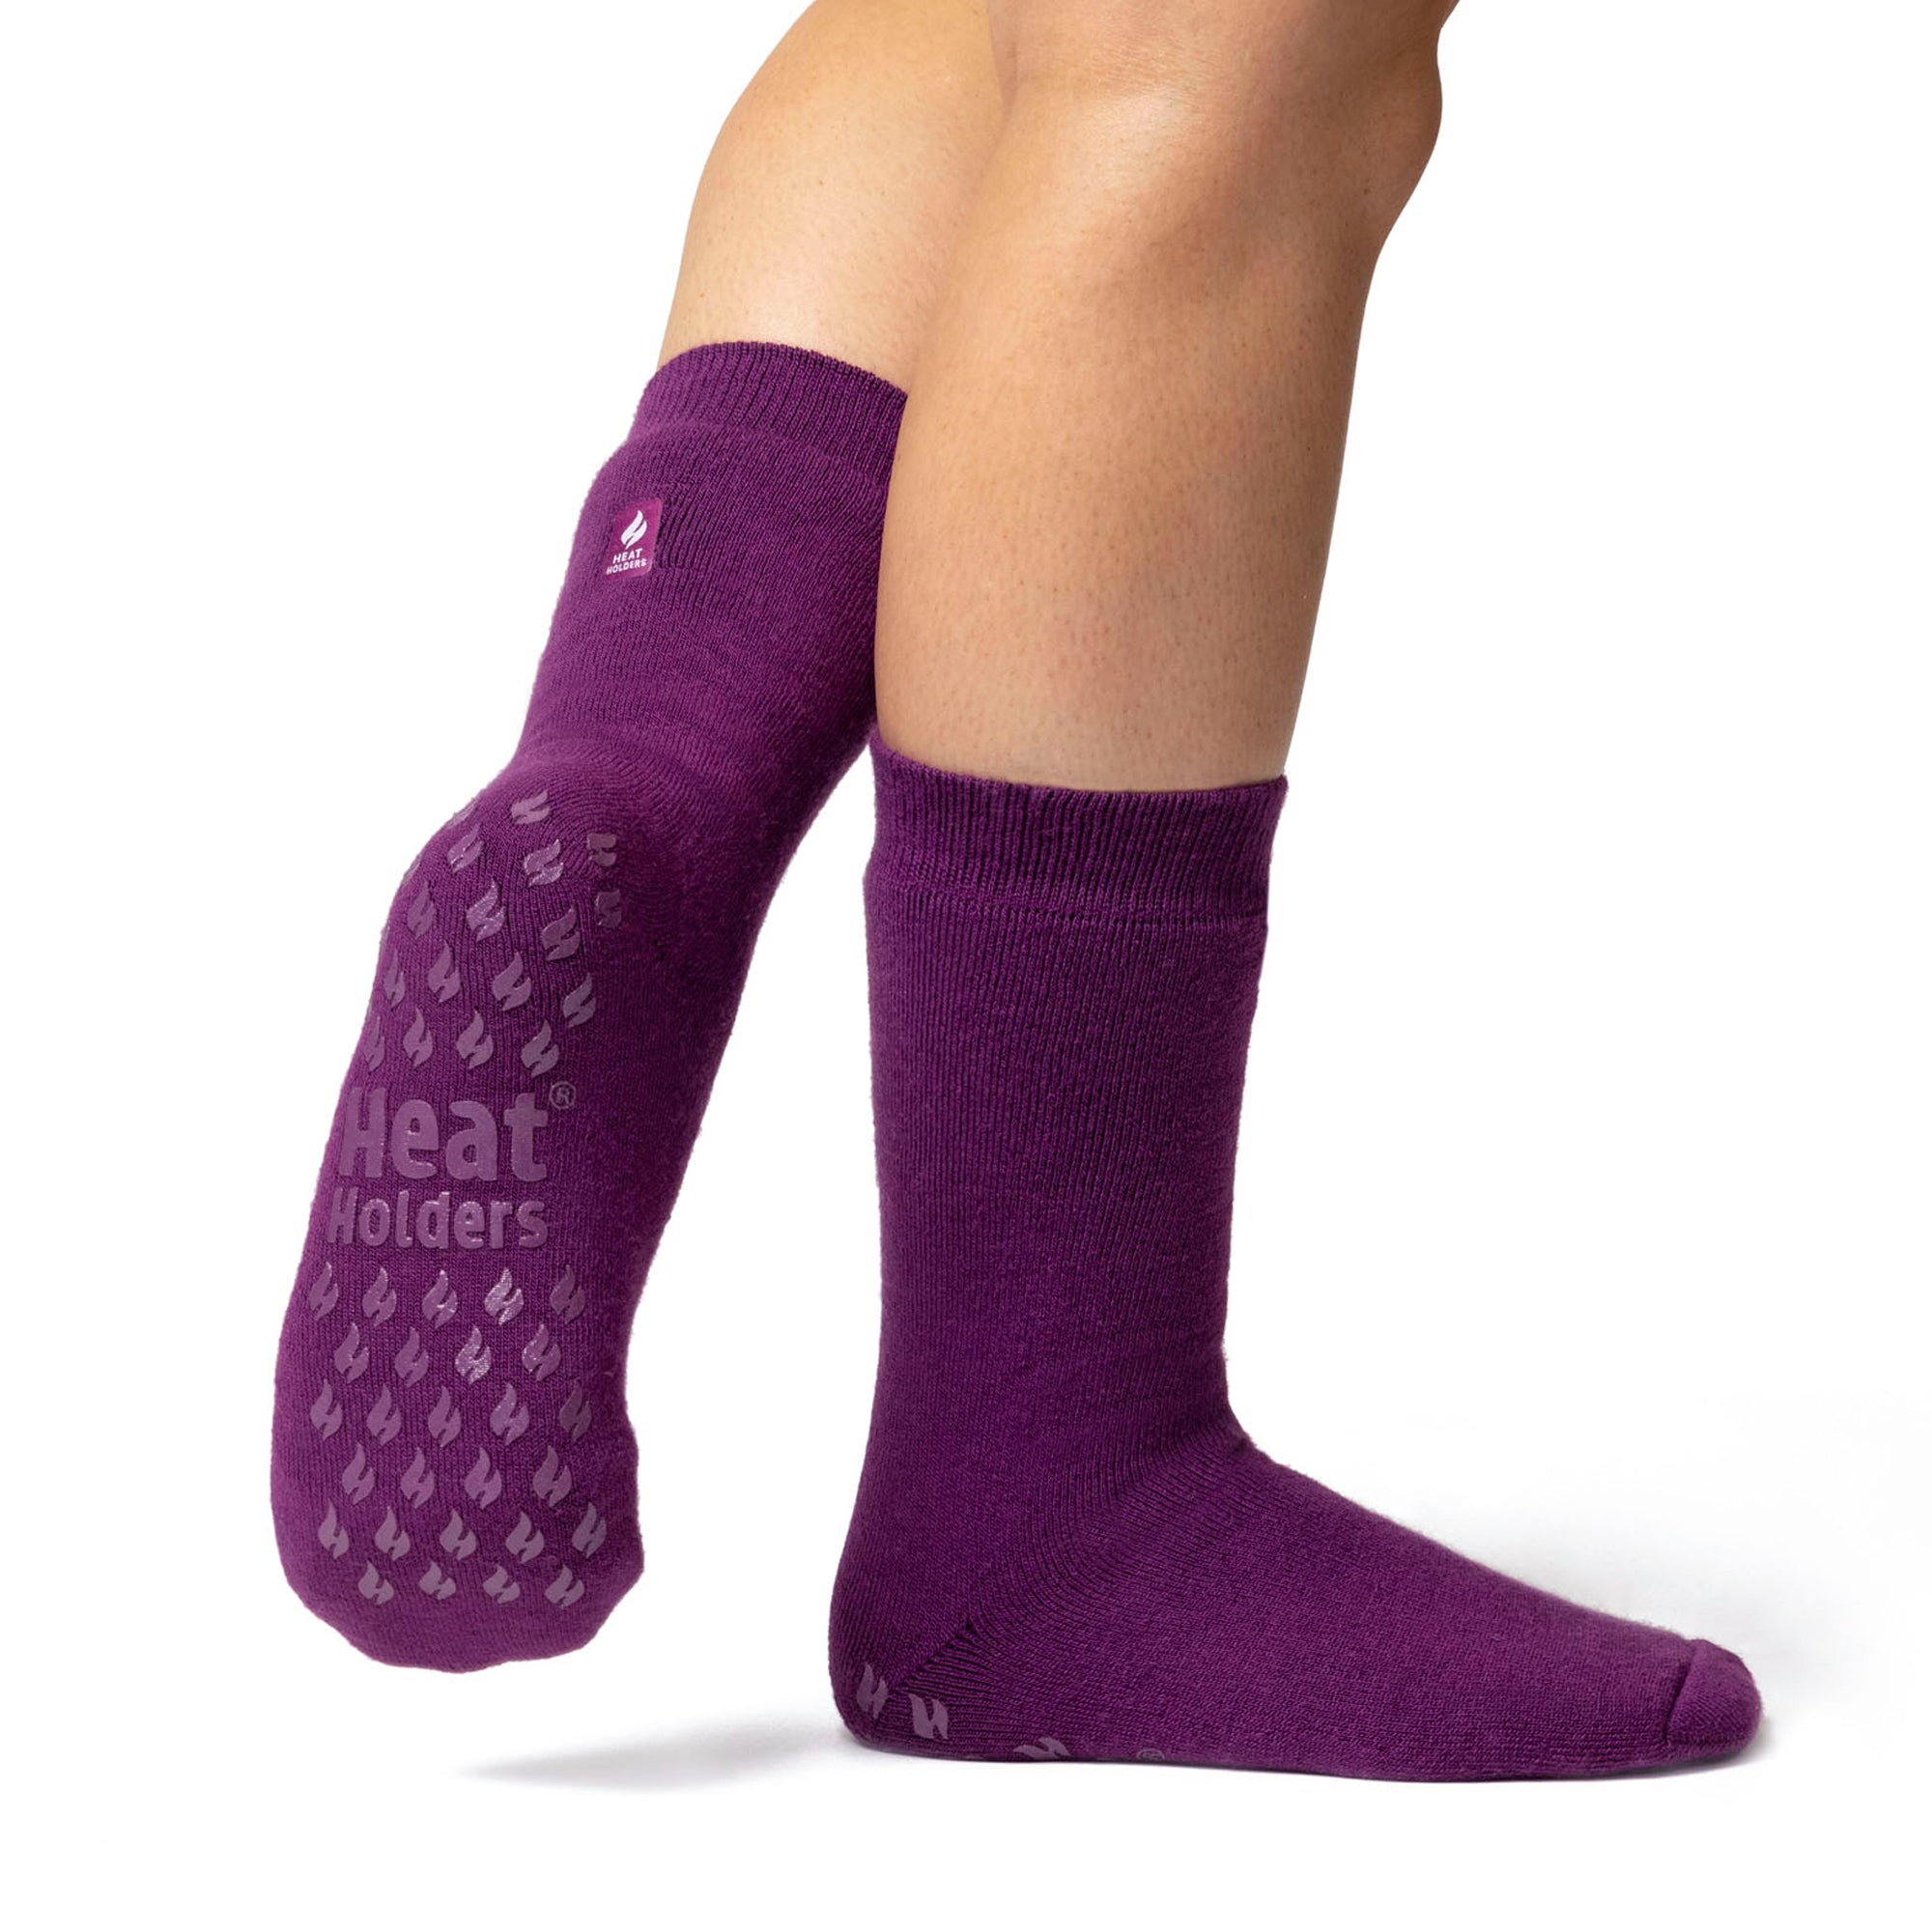 1 Pair Ladies IOMI FootNurse Heat Holders Dual Layer Raynaud's Thermal Warm Slipper Socks Violet